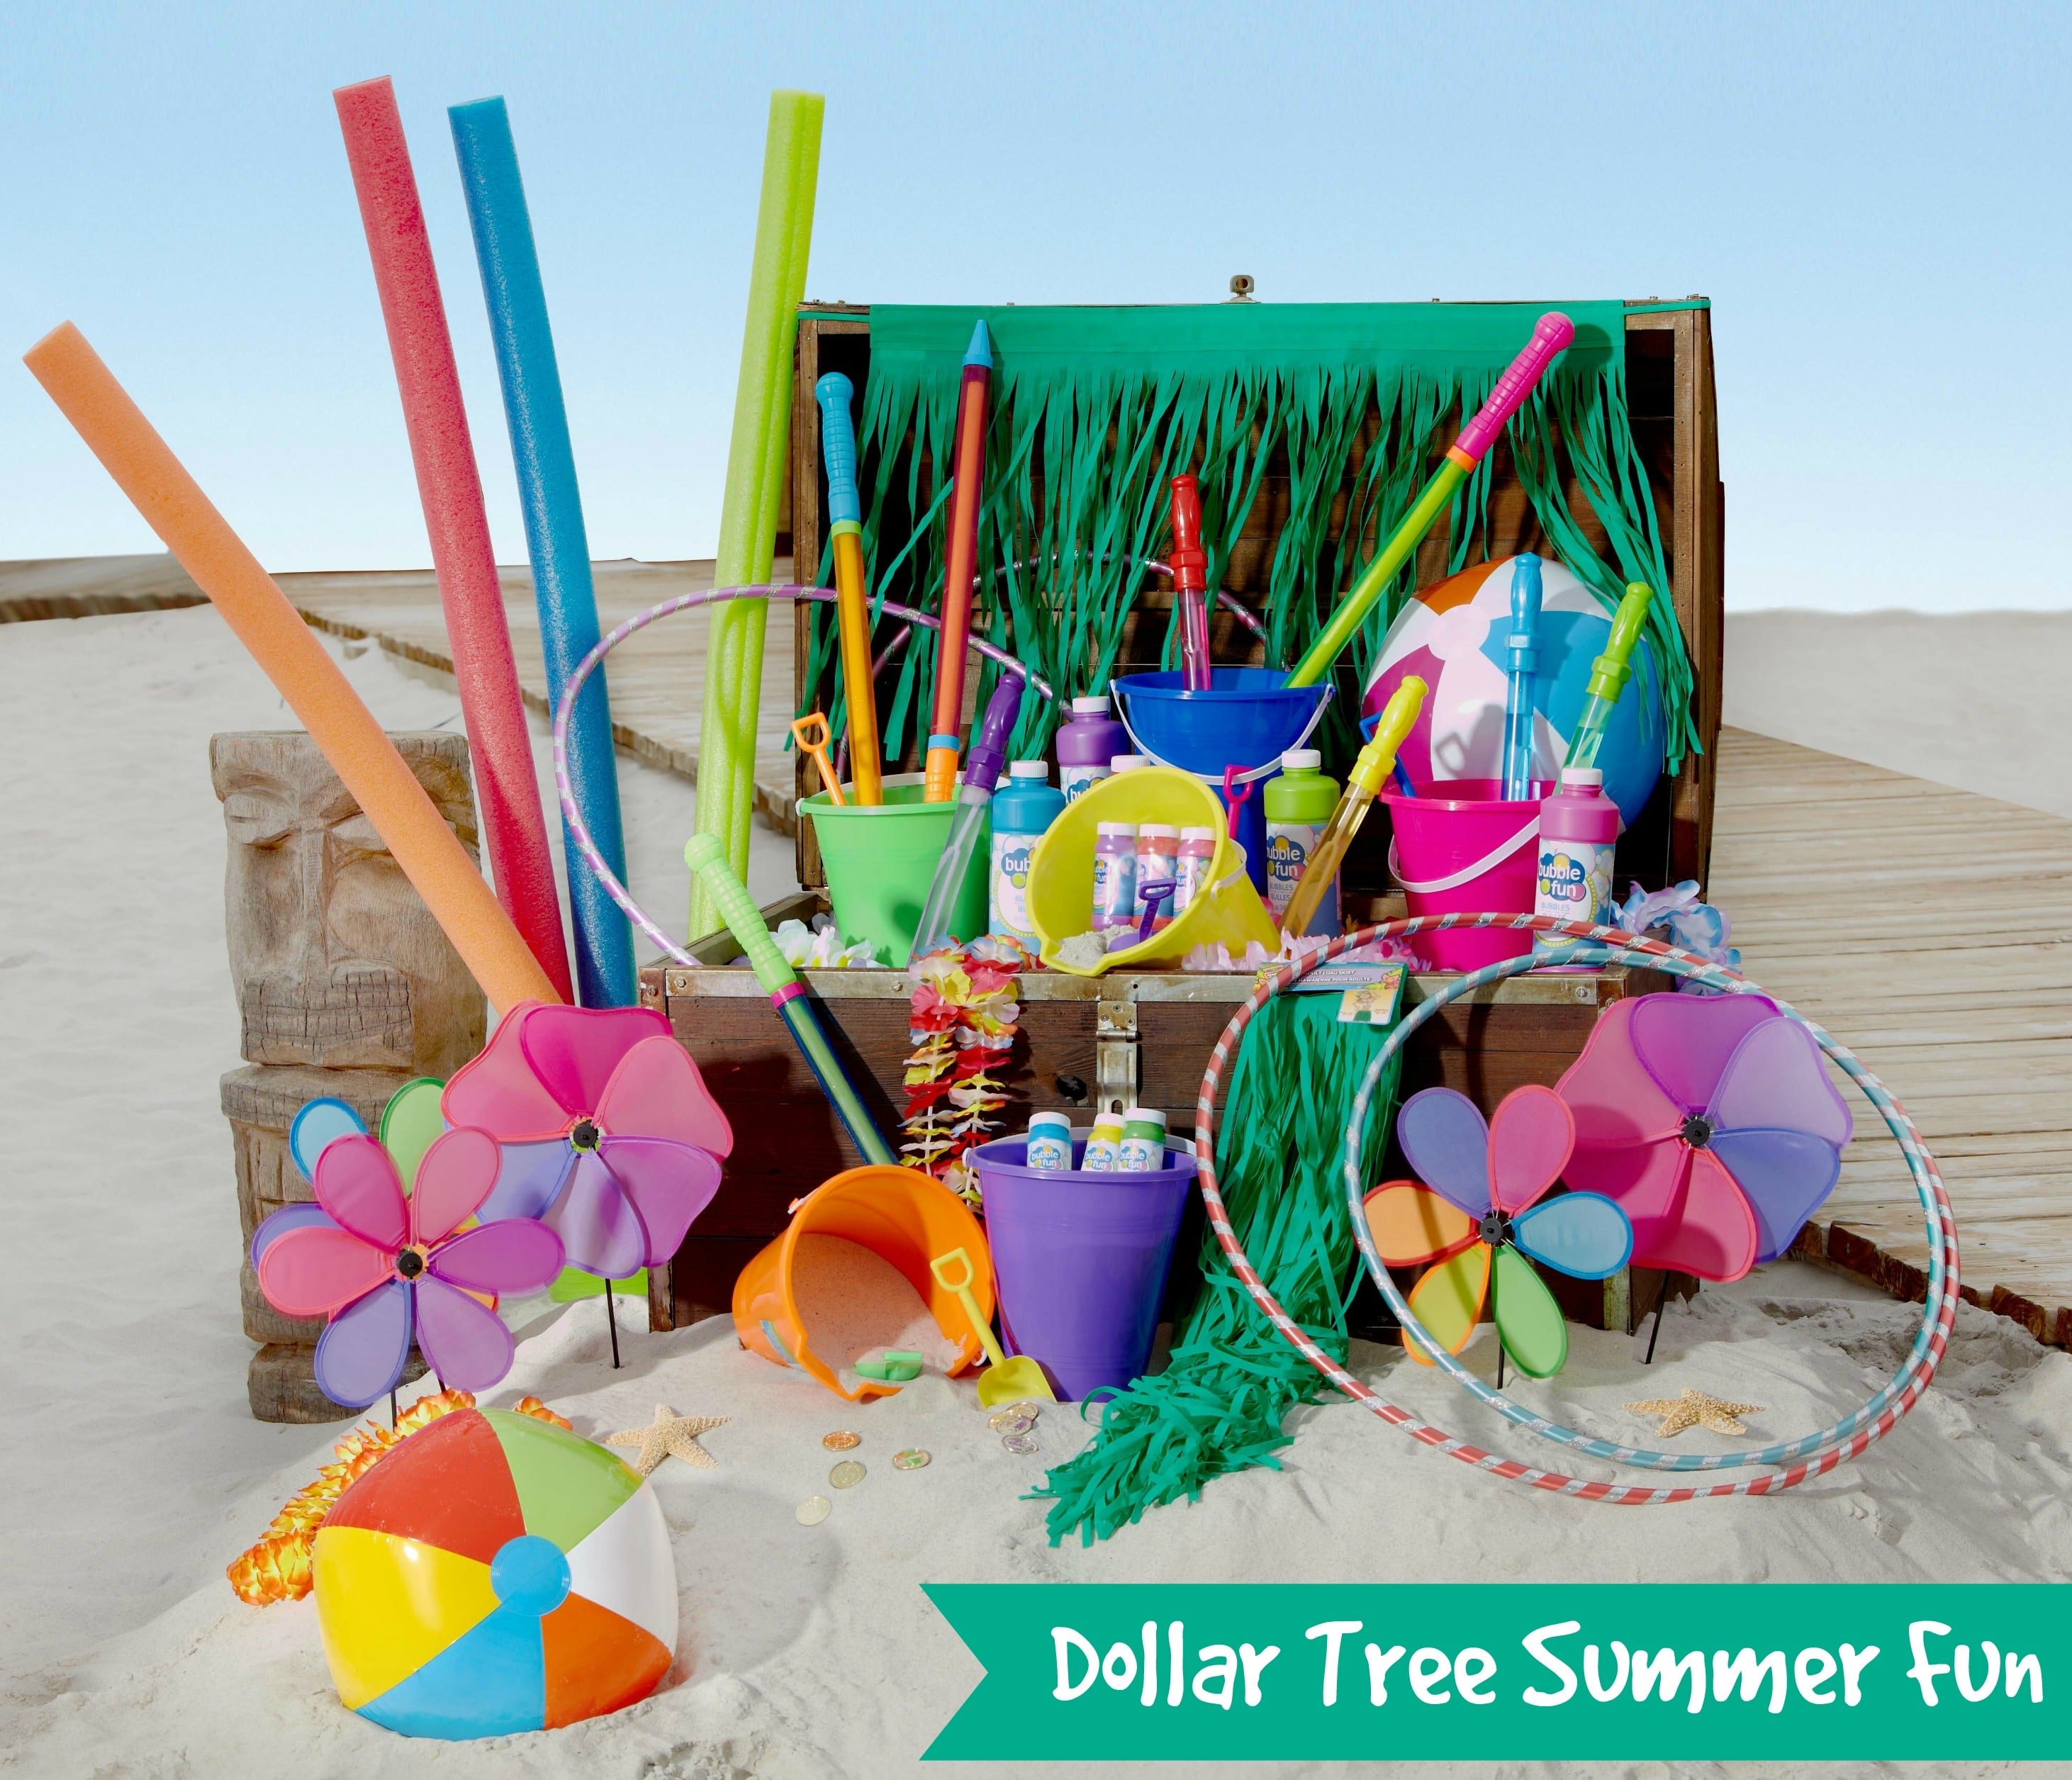 All NEW products at Dollar Tree Summer Fun #DTSneakPeek #ad | MoneywiseMoms